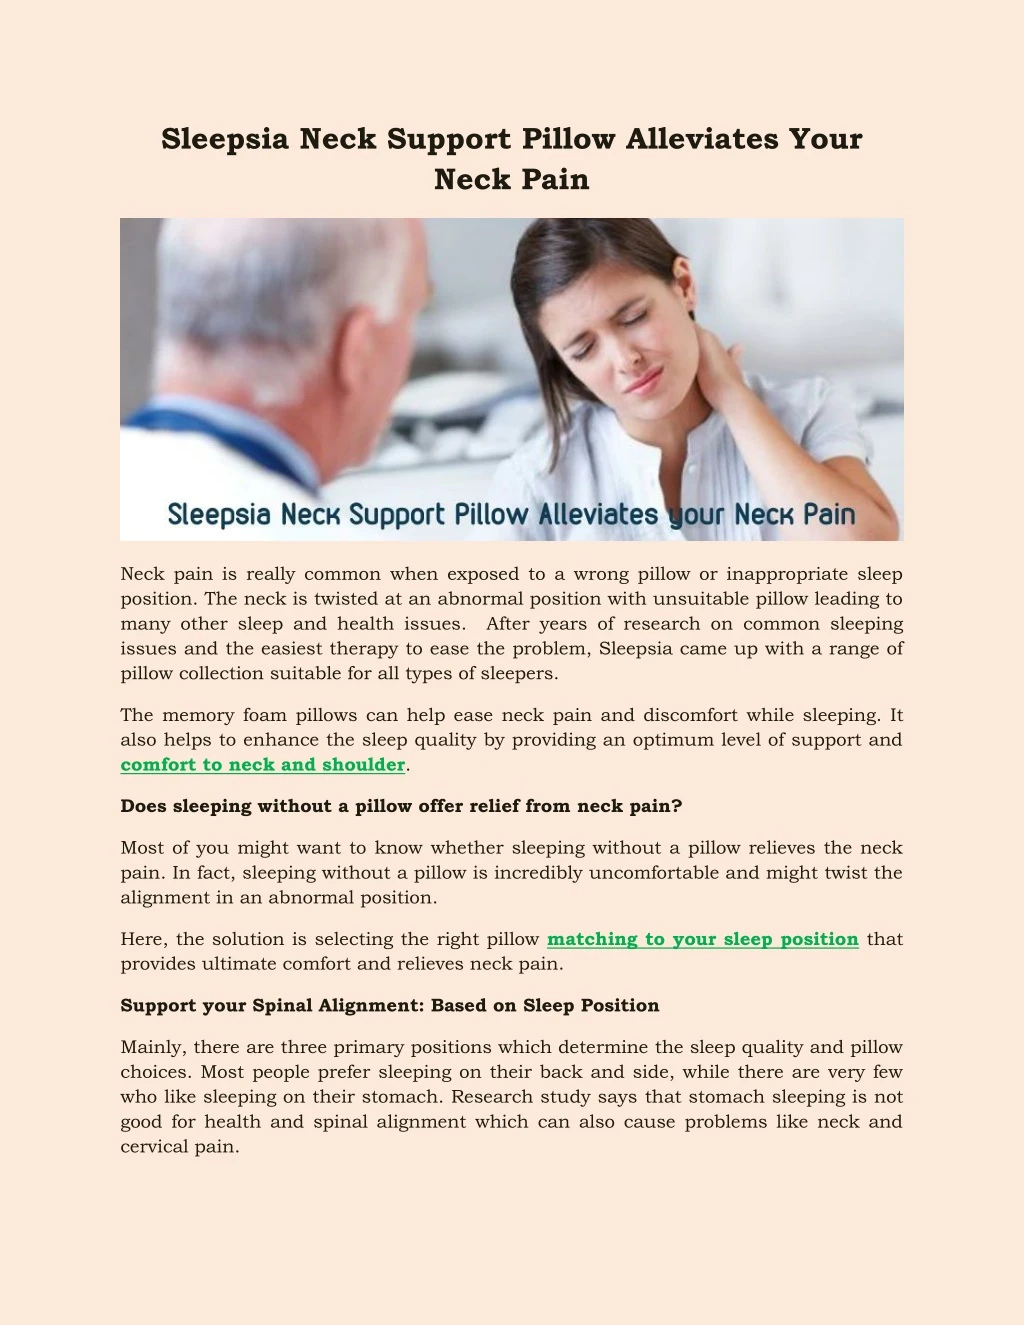 sleepsia neck support pillow alleviates your neck